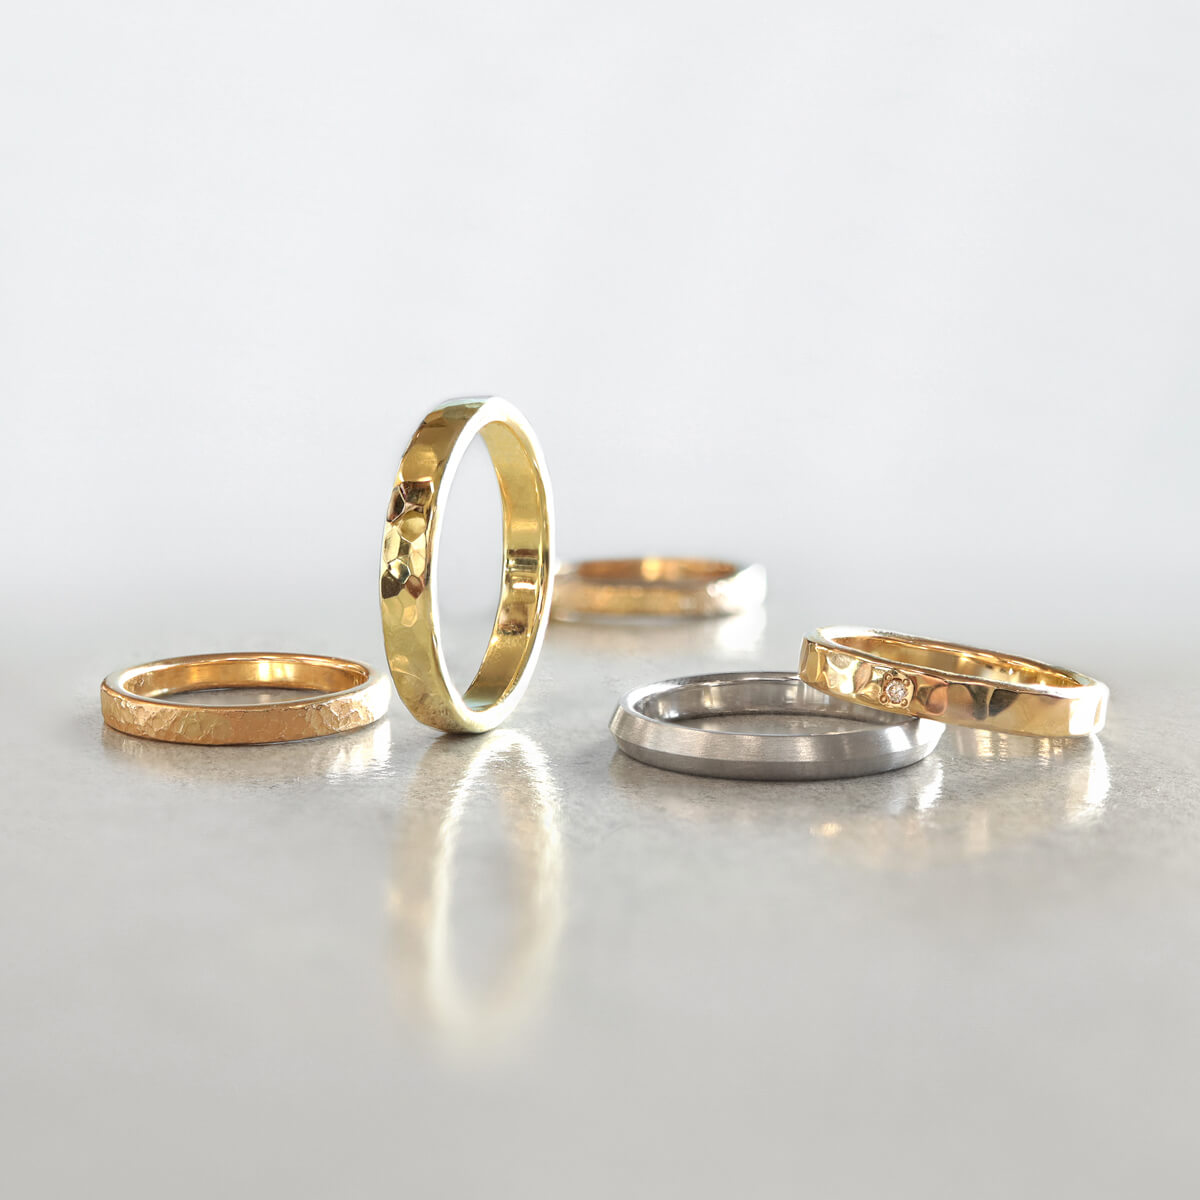 Premium wedding ring quality rings